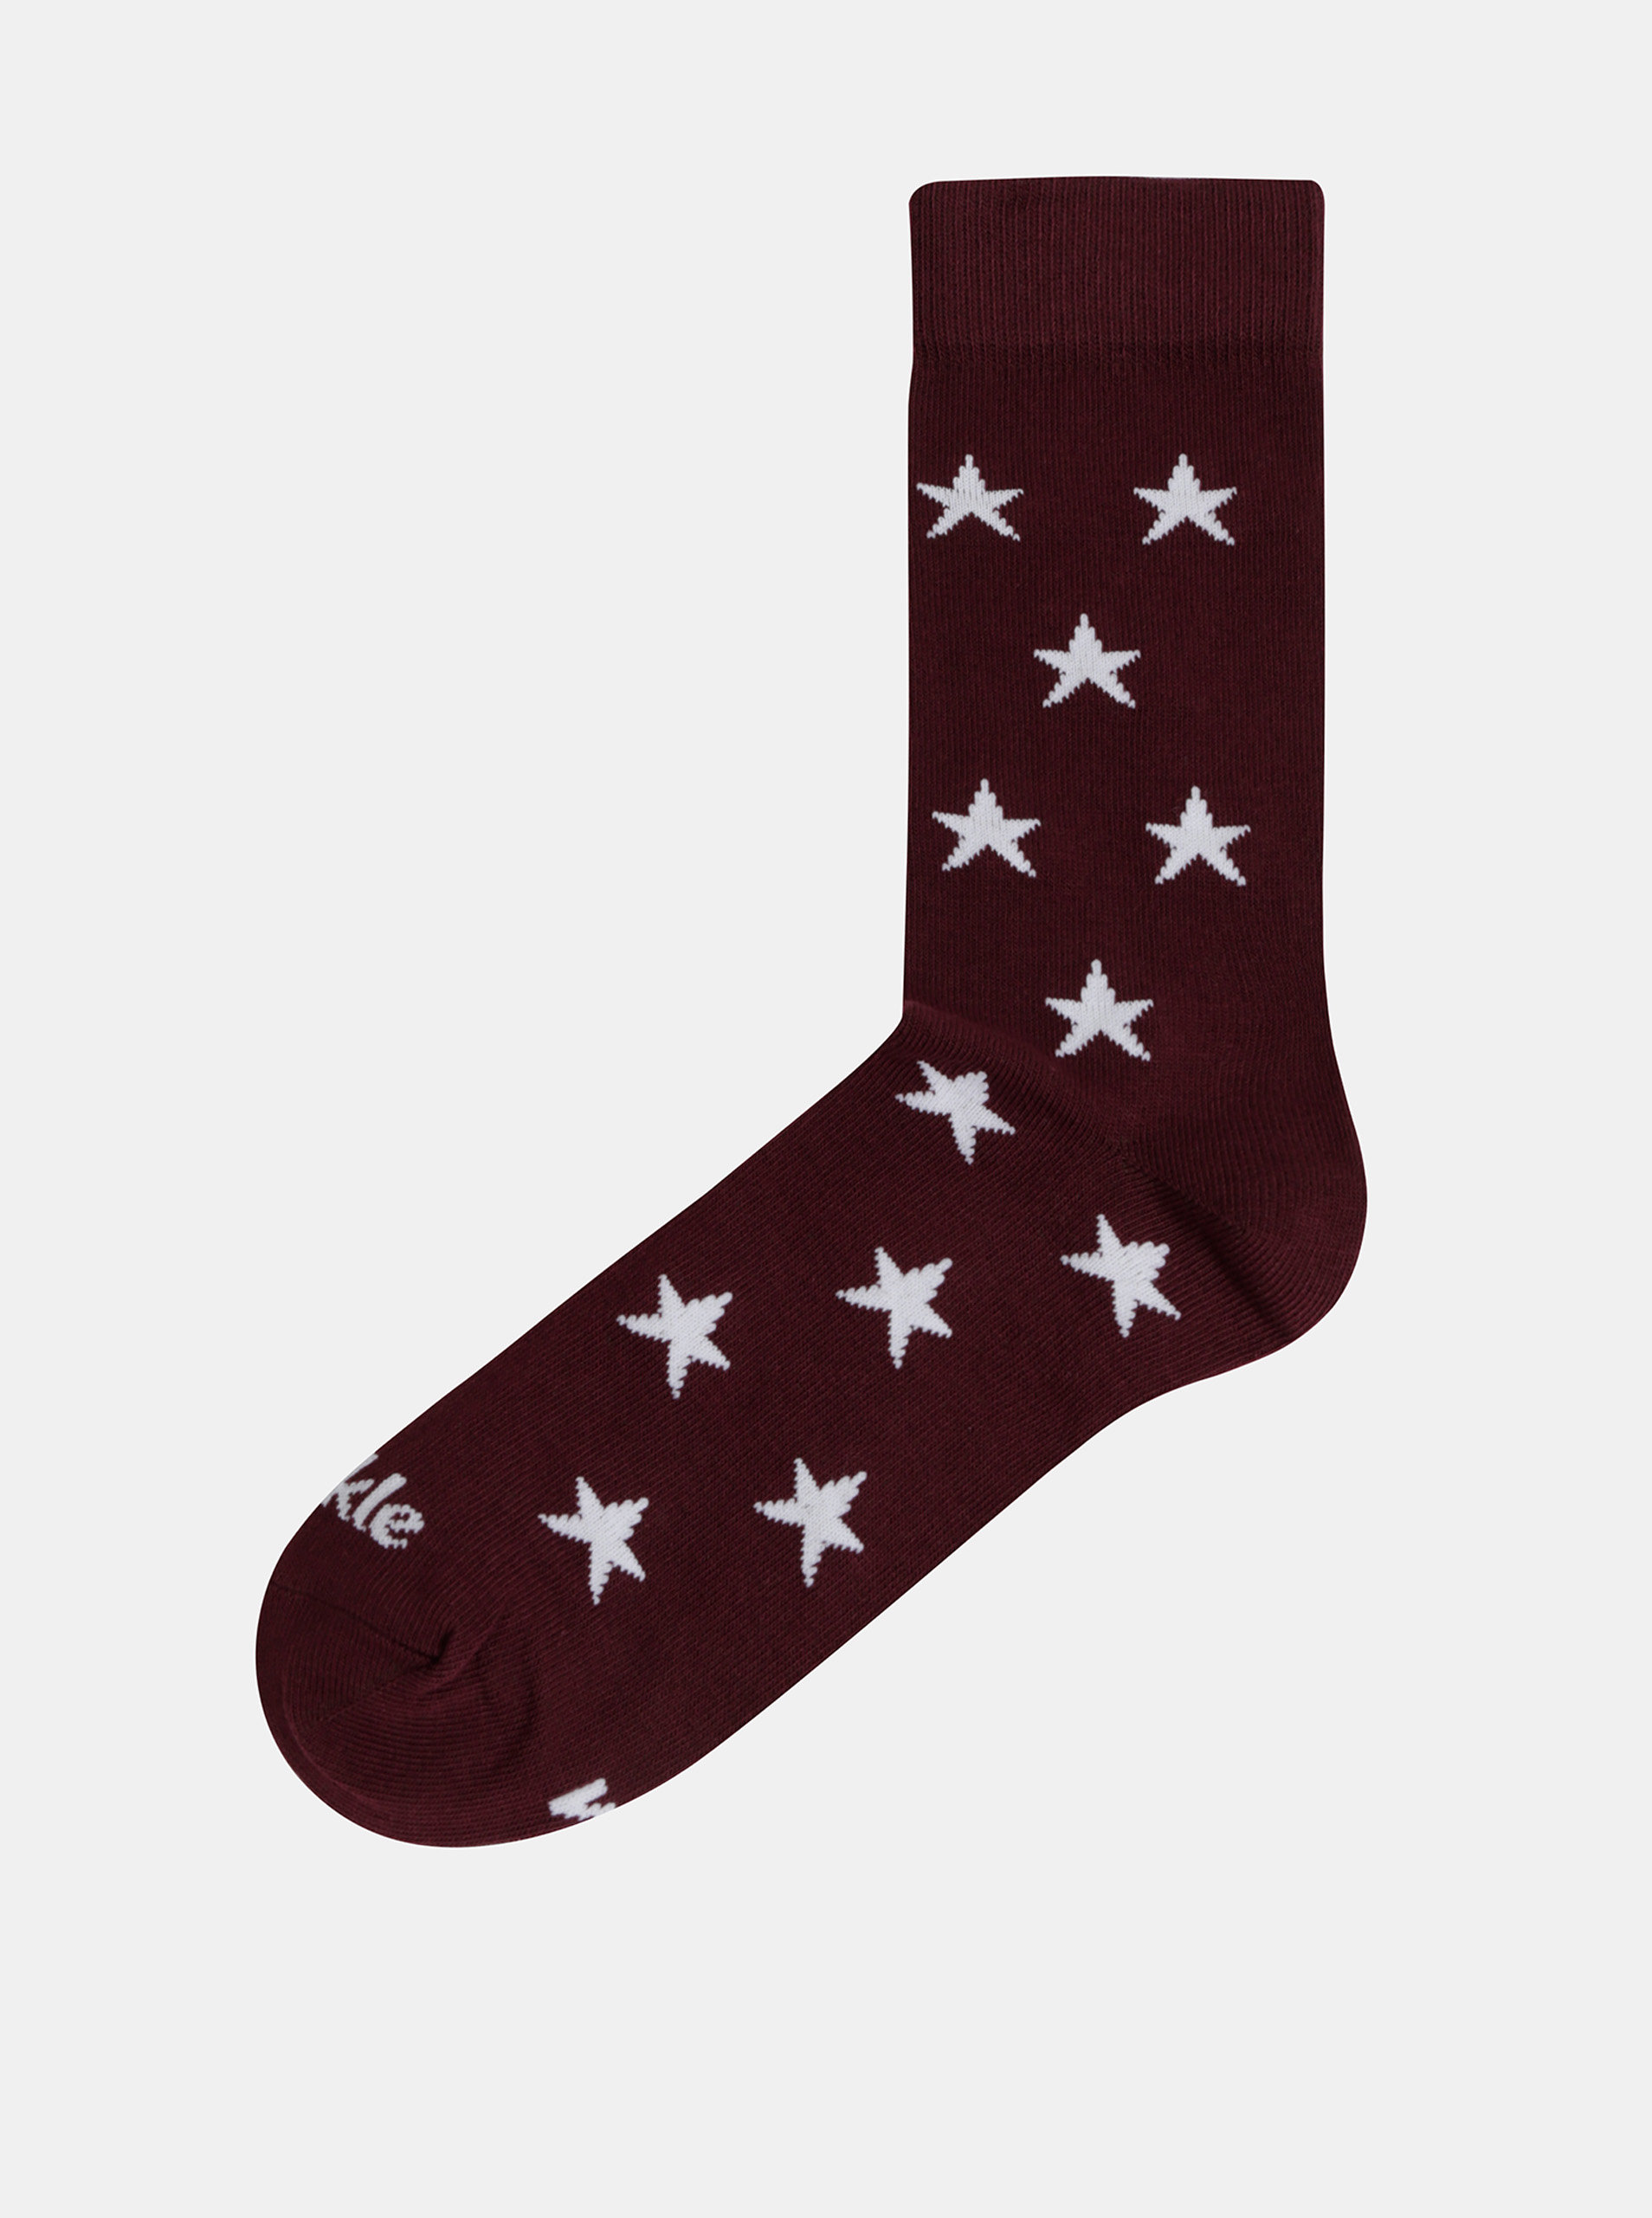 Fotografie Vínové vzorované ponožky Fusakle Hvězda